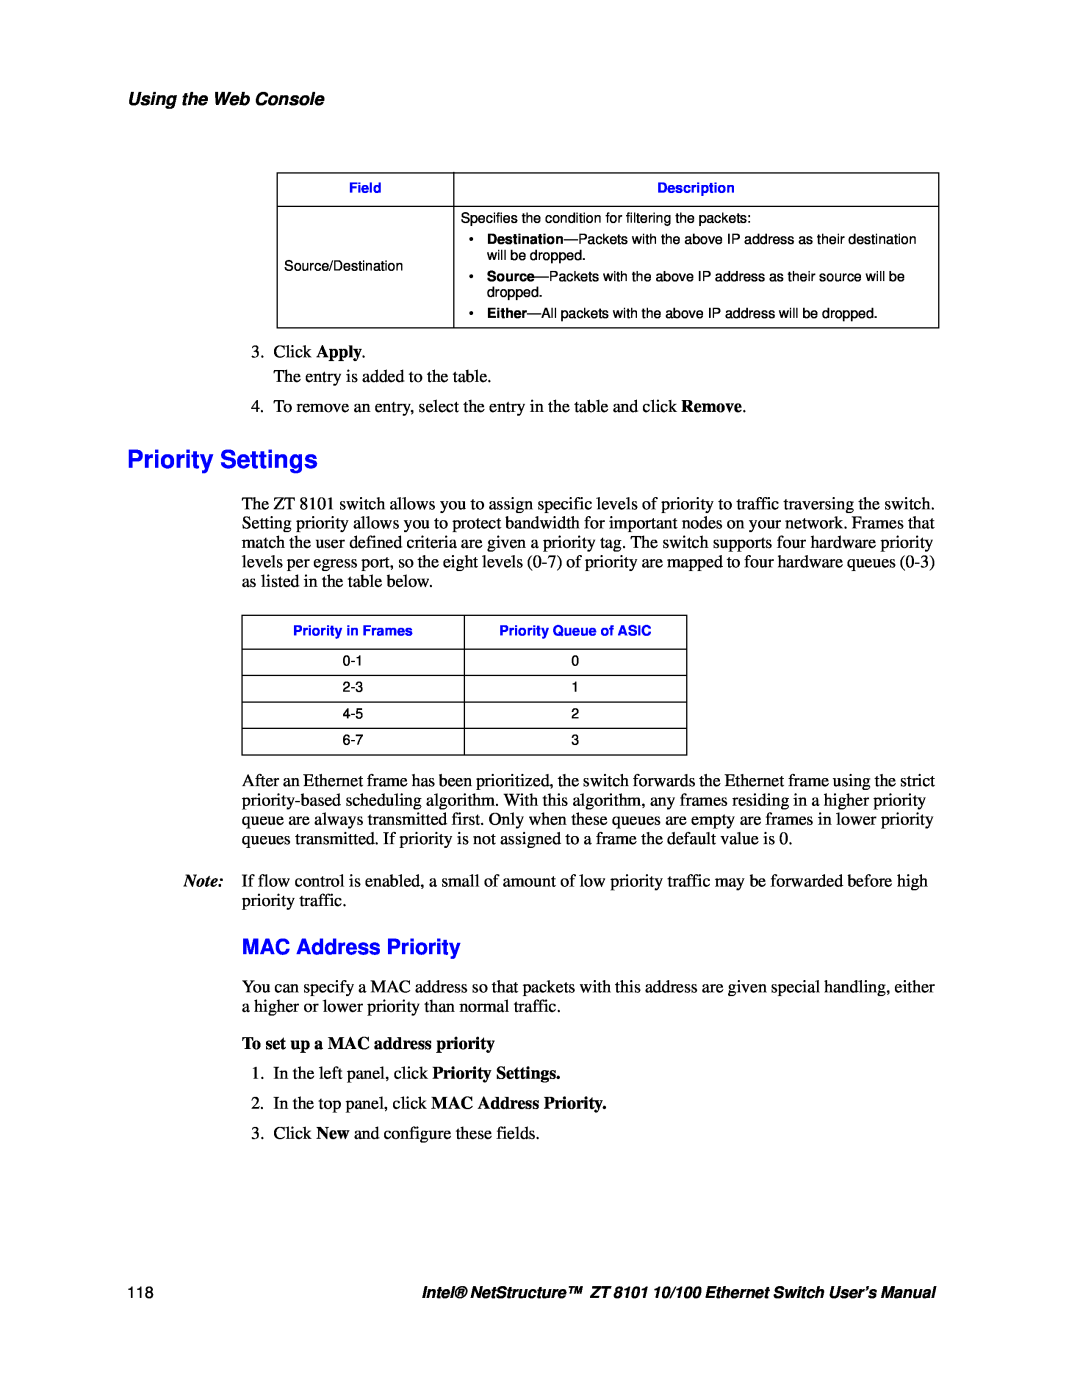 Intel ZT 8101 10/100 user manual Priority Settings, MAC Address Priority, Using the Web Console 